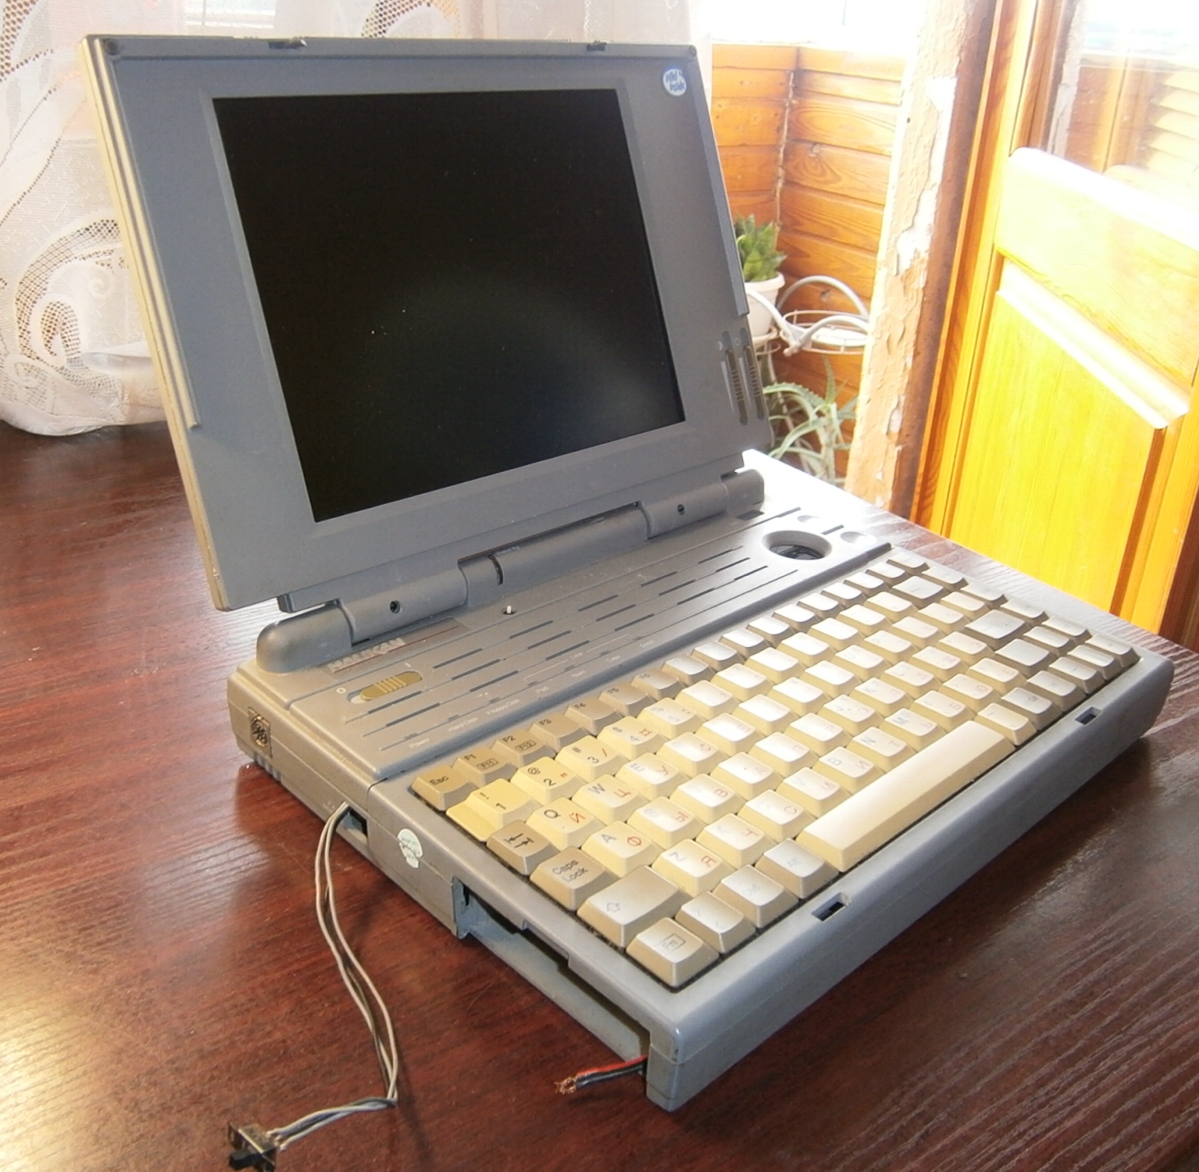 Ноутбук Nec Versa A2100